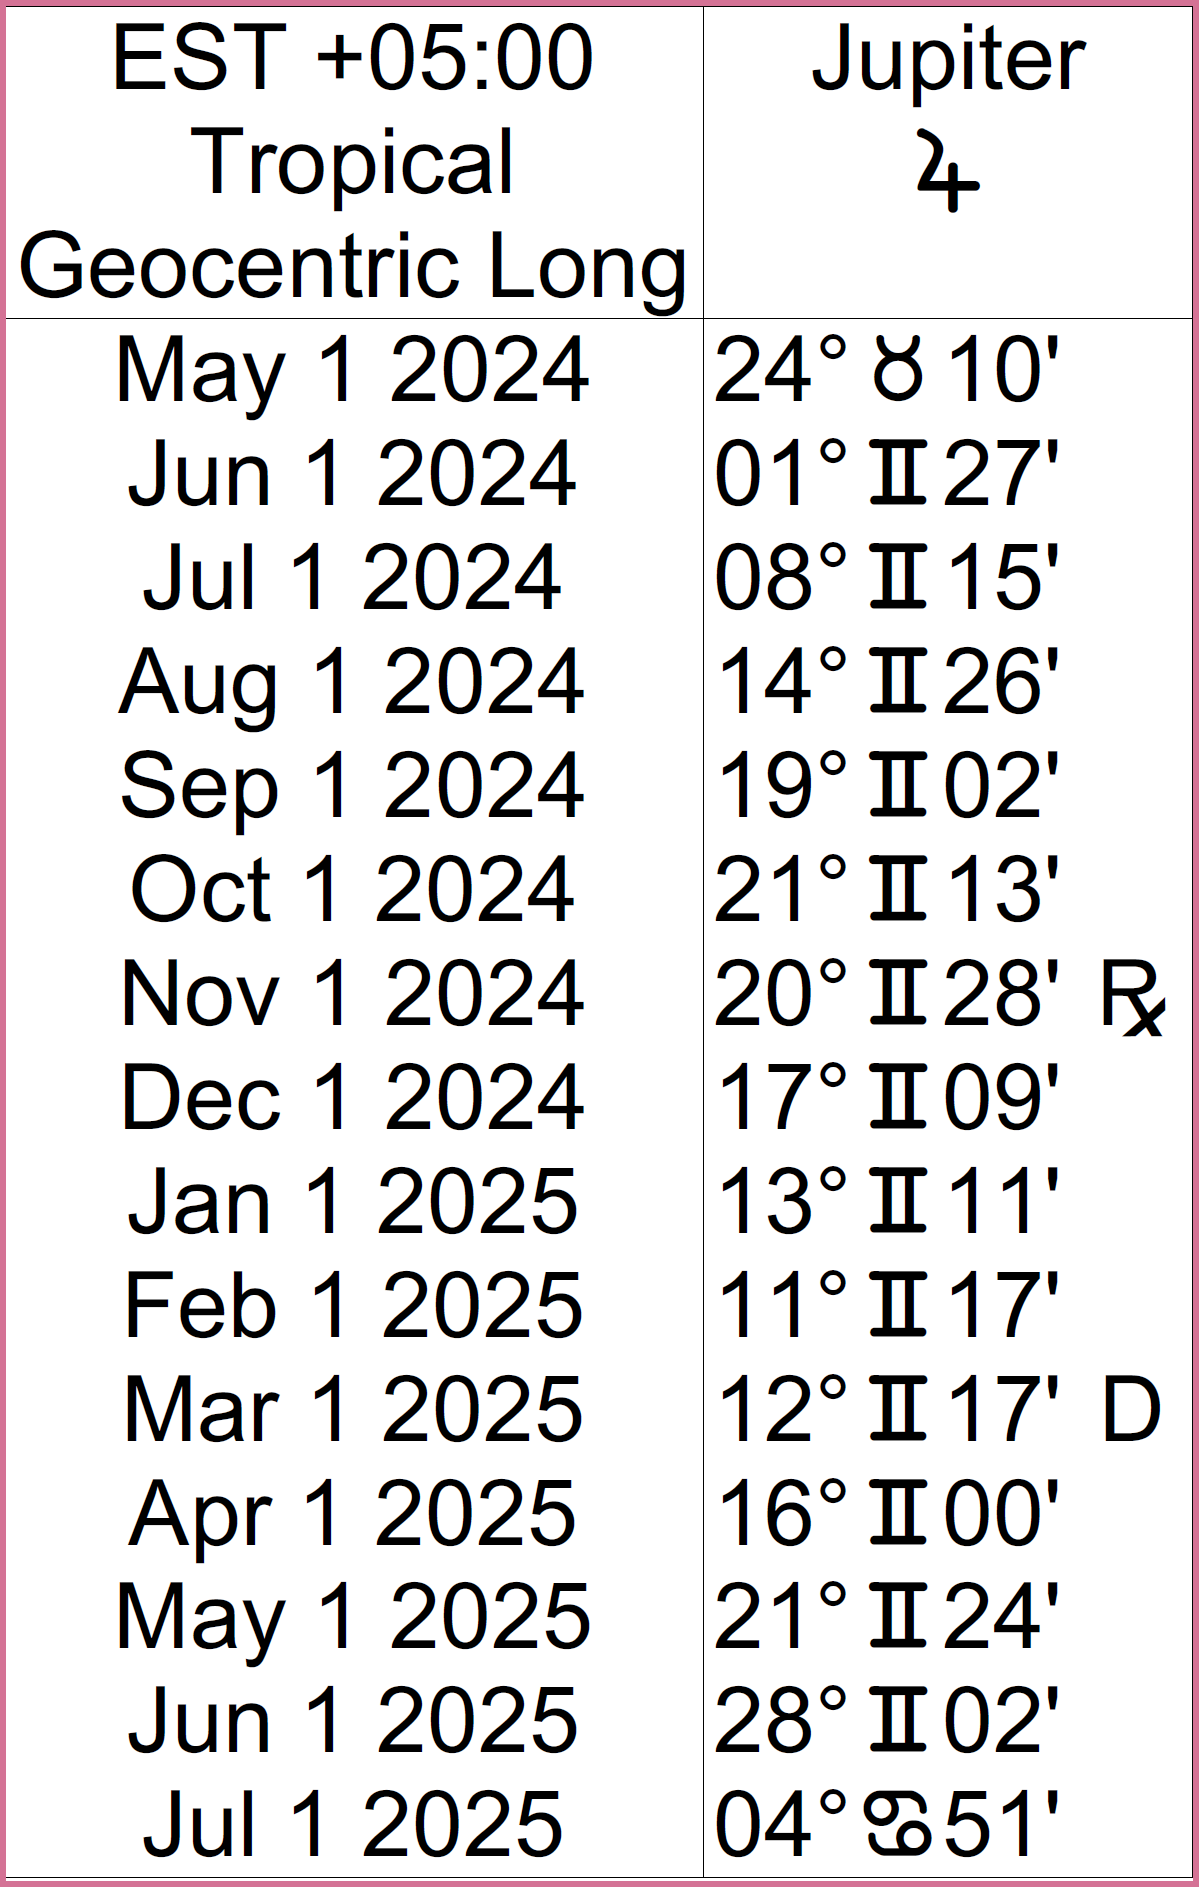 A list of monthly dates with Jupiter positions: May 1, 2024, 24 Taurus 10; June 1, 2024, 1 Gemini 27; July 1, 2024, 8 Gemini 15; August 1, 2024, 14 Gemini 26; Sep 1, 2024, 19 Gemini 02; Oct 1, 2024, 21 Gemini 13; Nov 1, 2024, 20 Gemini 28 Rx; Dec 1 2024, 17 Gemini 09; Jan 1, 2025, 13 Gemini 11; Feb 1, 2025, 11 Gemini 17; Mar 1, 2025, 12 Gemini 17 D; Apr 1, 2025, 16 Gemini 00; May 1, 2025, 21 Gemini 24; Jun 1, 2025, 28 Gemini 02; ; Jul 1, 2025, 4 Cancer 51